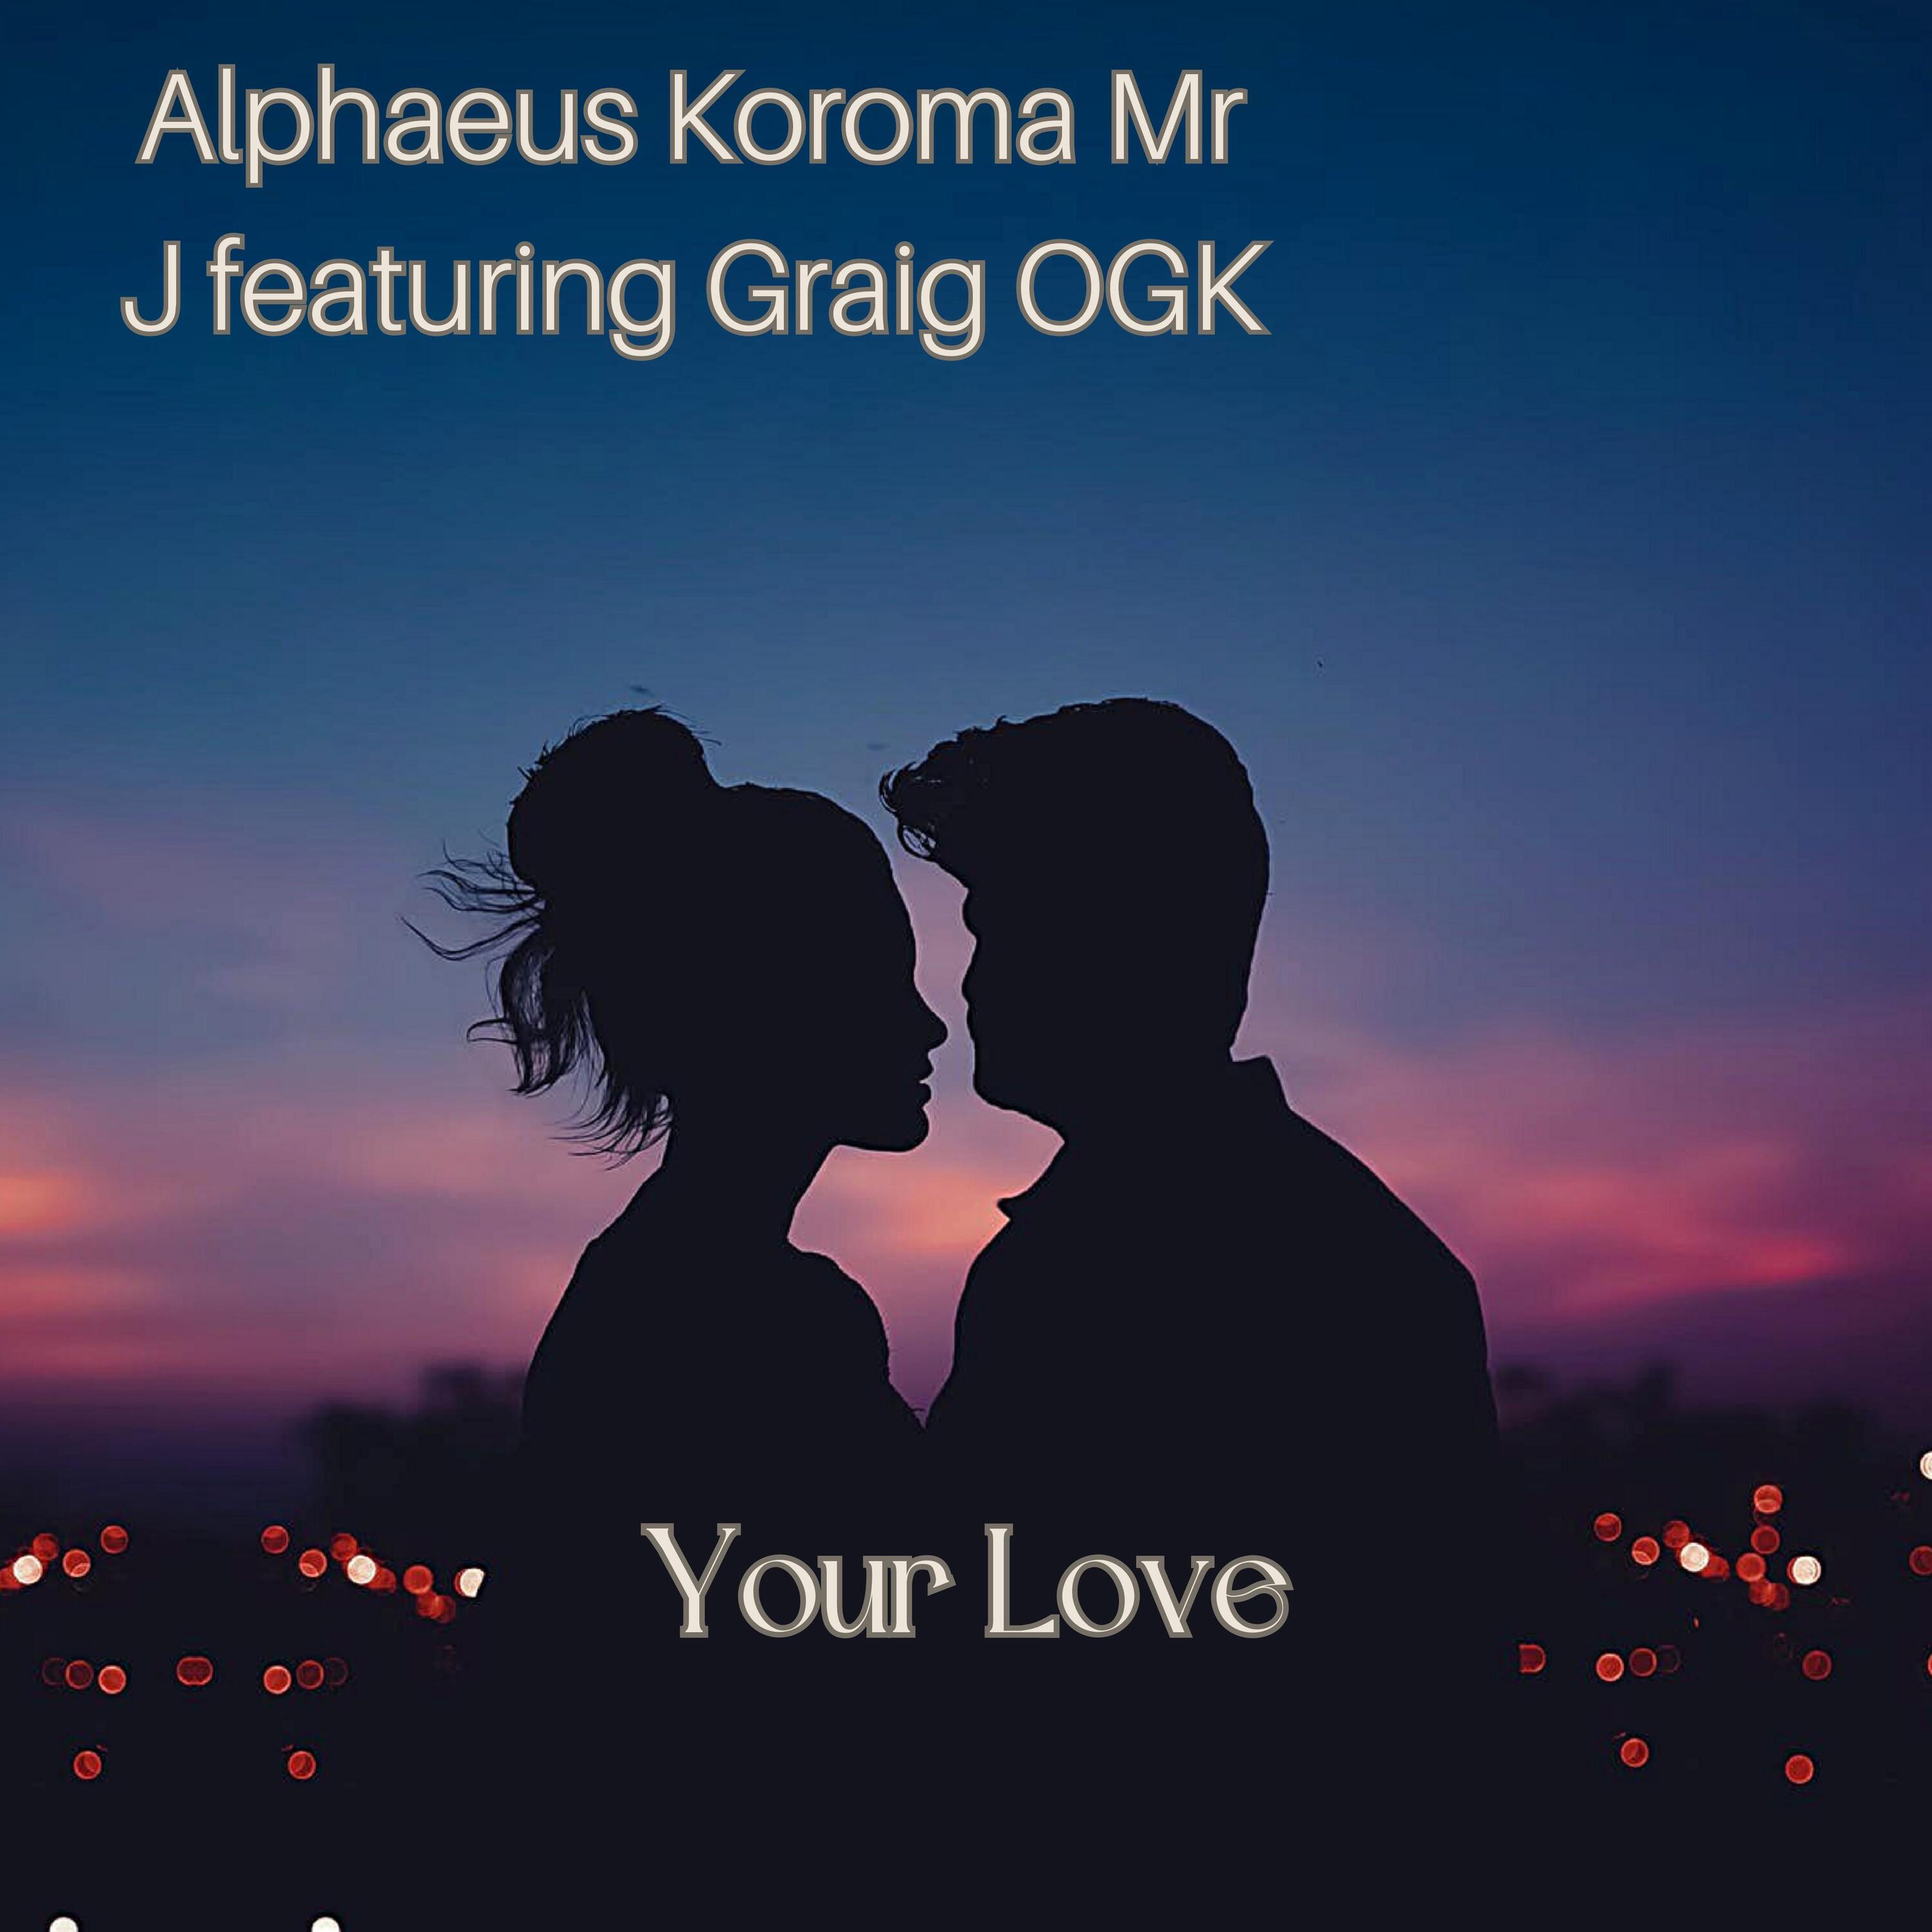 Your Love by Alphaeus Koroma Mr J | Album